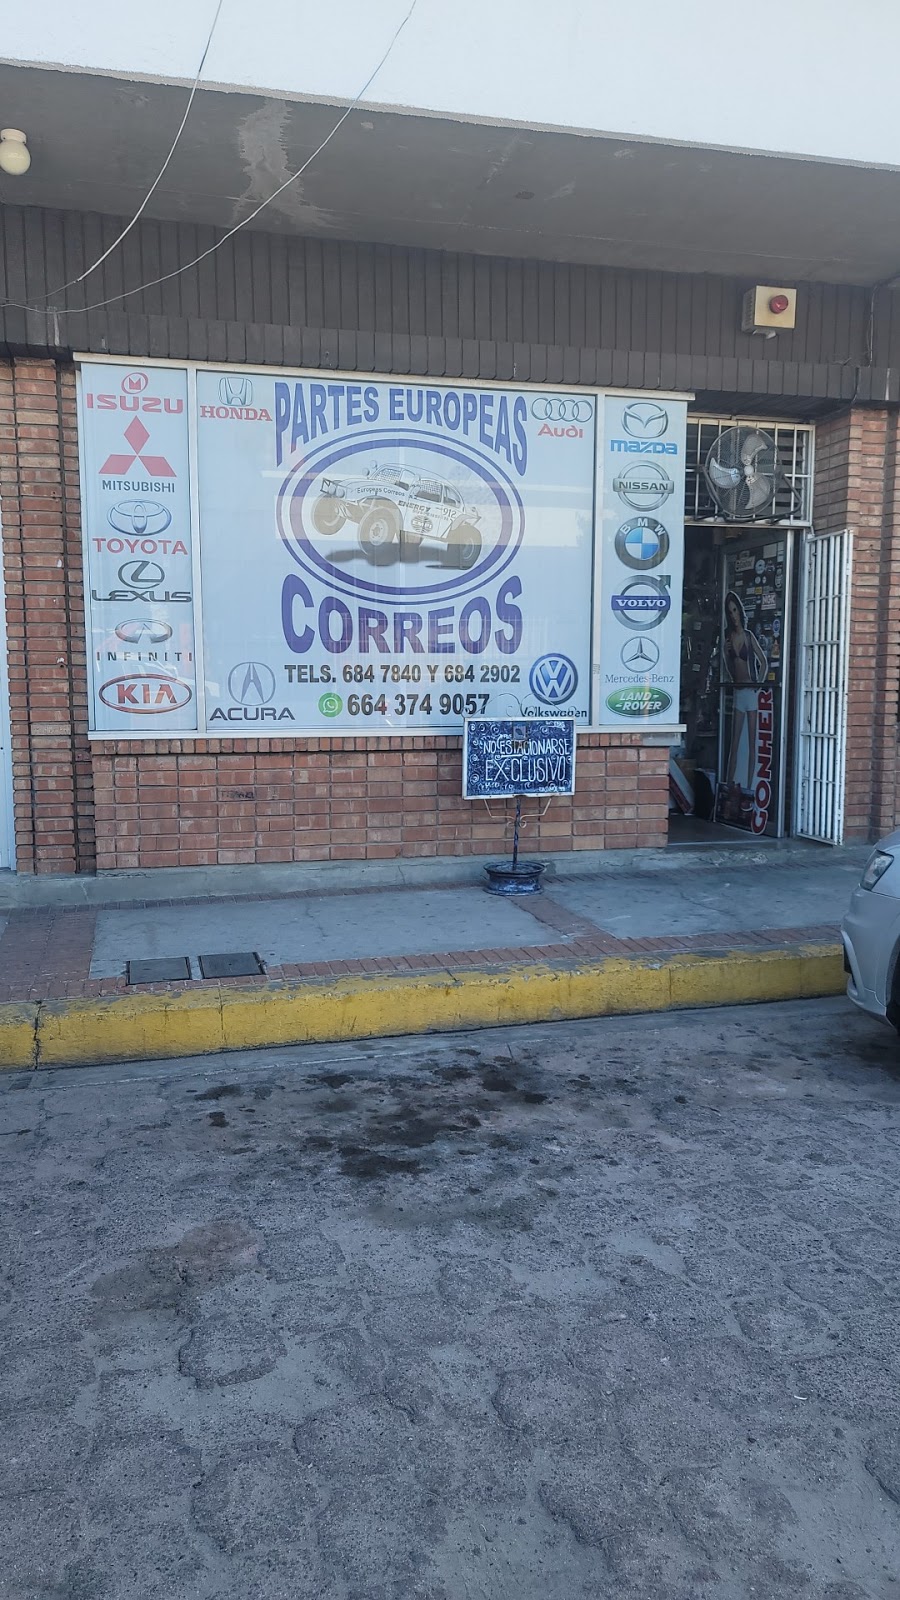 Partes Europeas Correos | Blvd. Agua Caliente 105-14, Zona Centro, 22000 Tijuana, B.C., Mexico | Phone: 664 684 2902